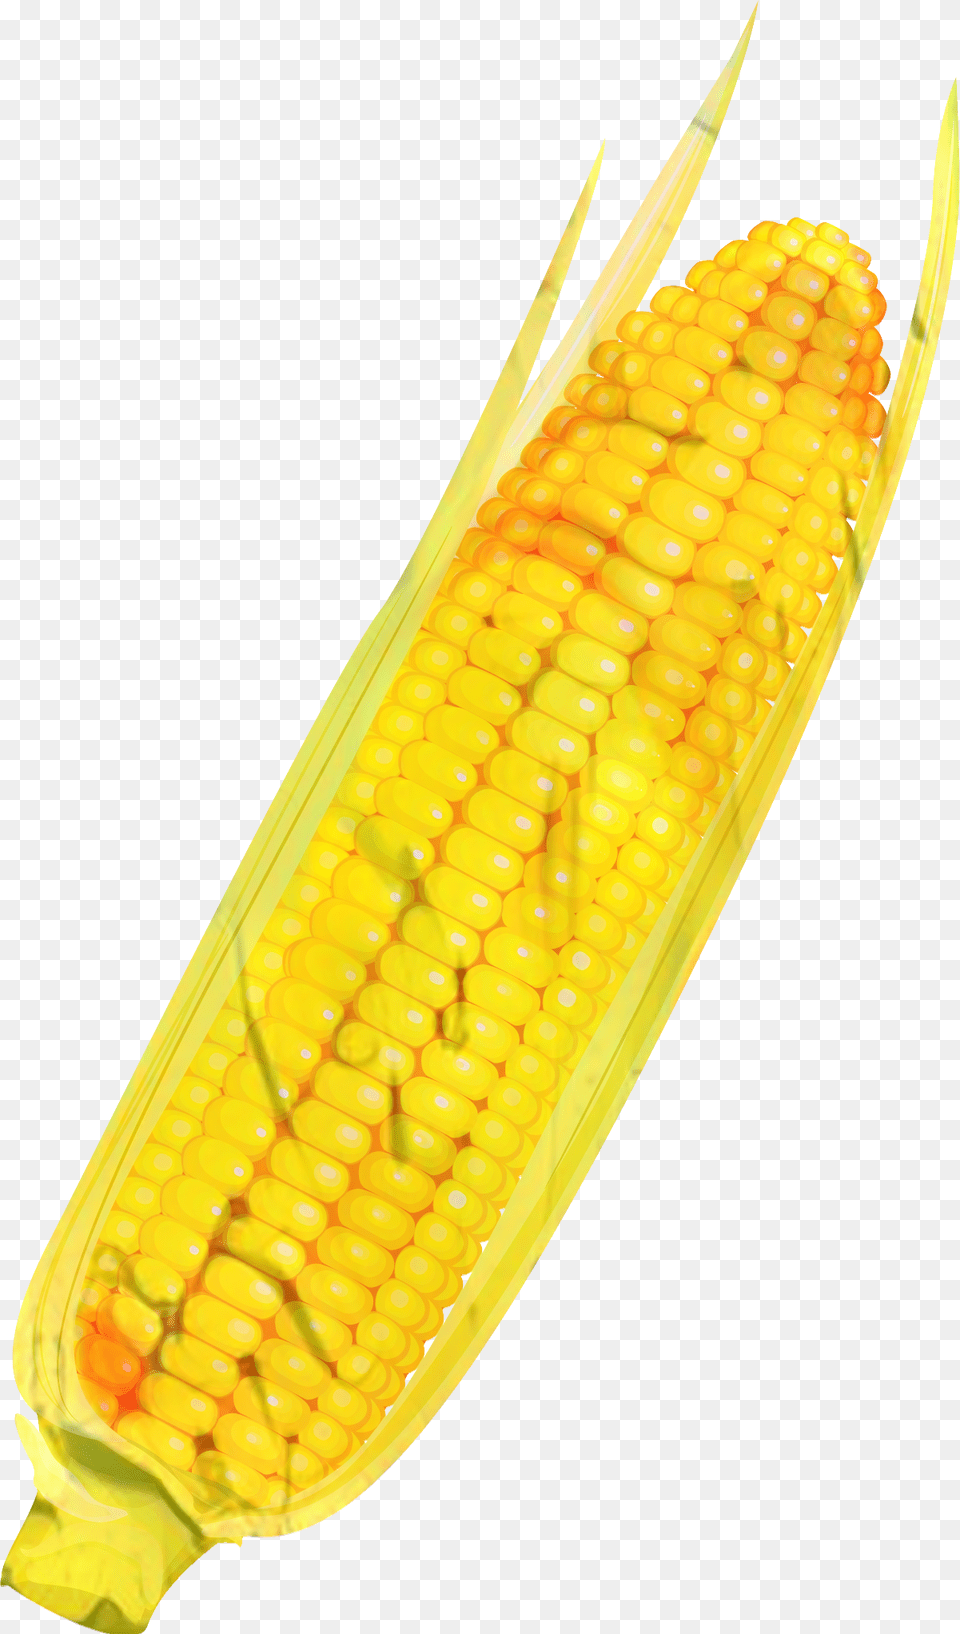 Corn On The Cob Commodity Corn On The Cob, Food, Grain, Plant, Produce Free Transparent Png